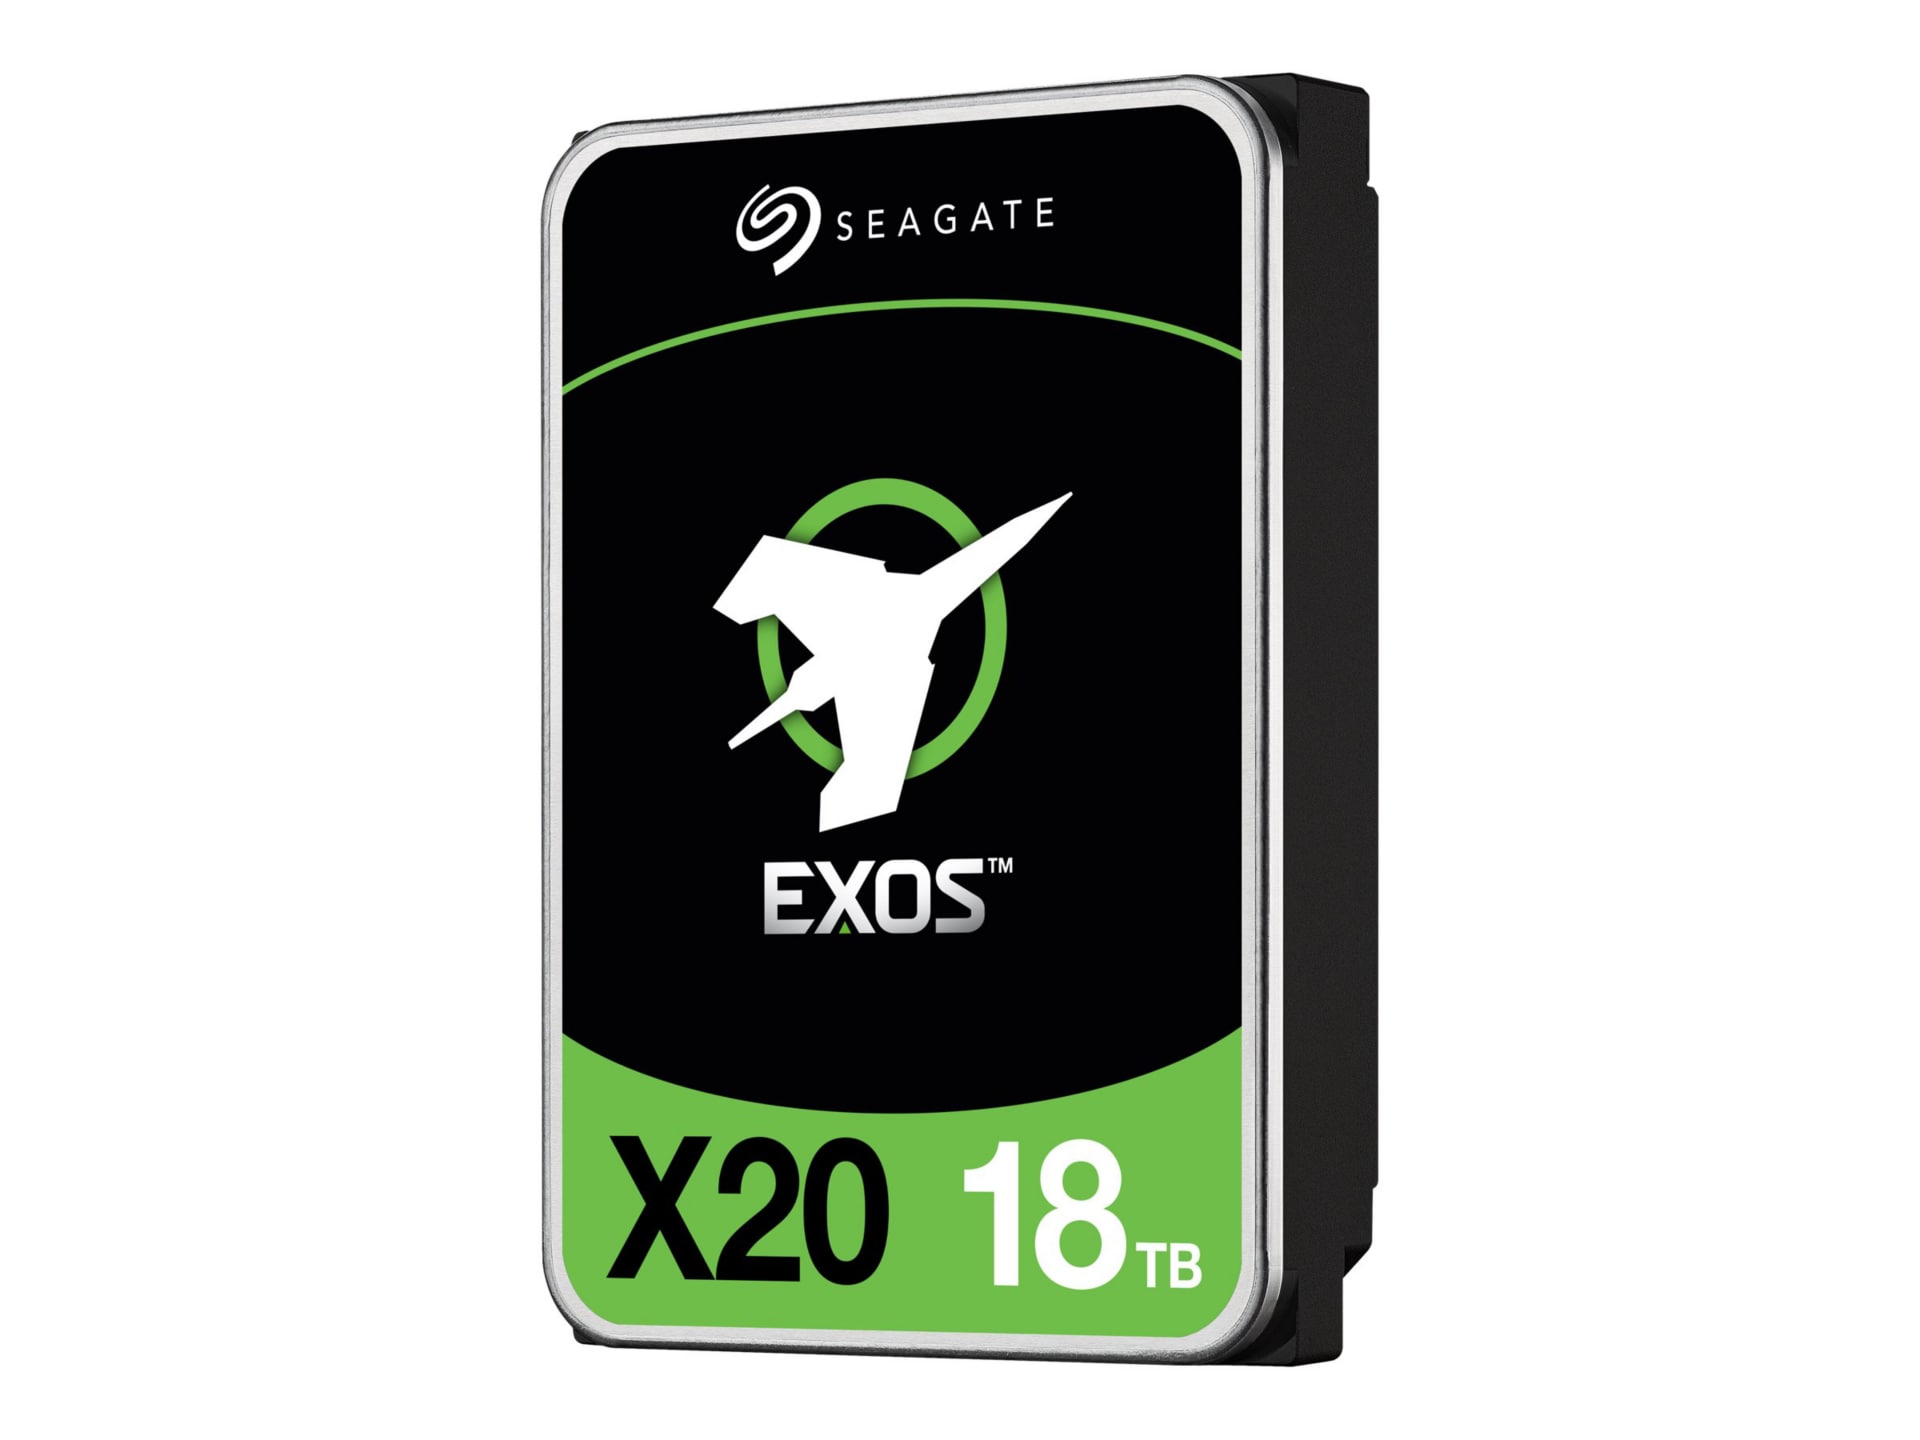 Seagate Exos X20 ST18000NM003D - hard drive - 18 TB - SATA 6Gb/s